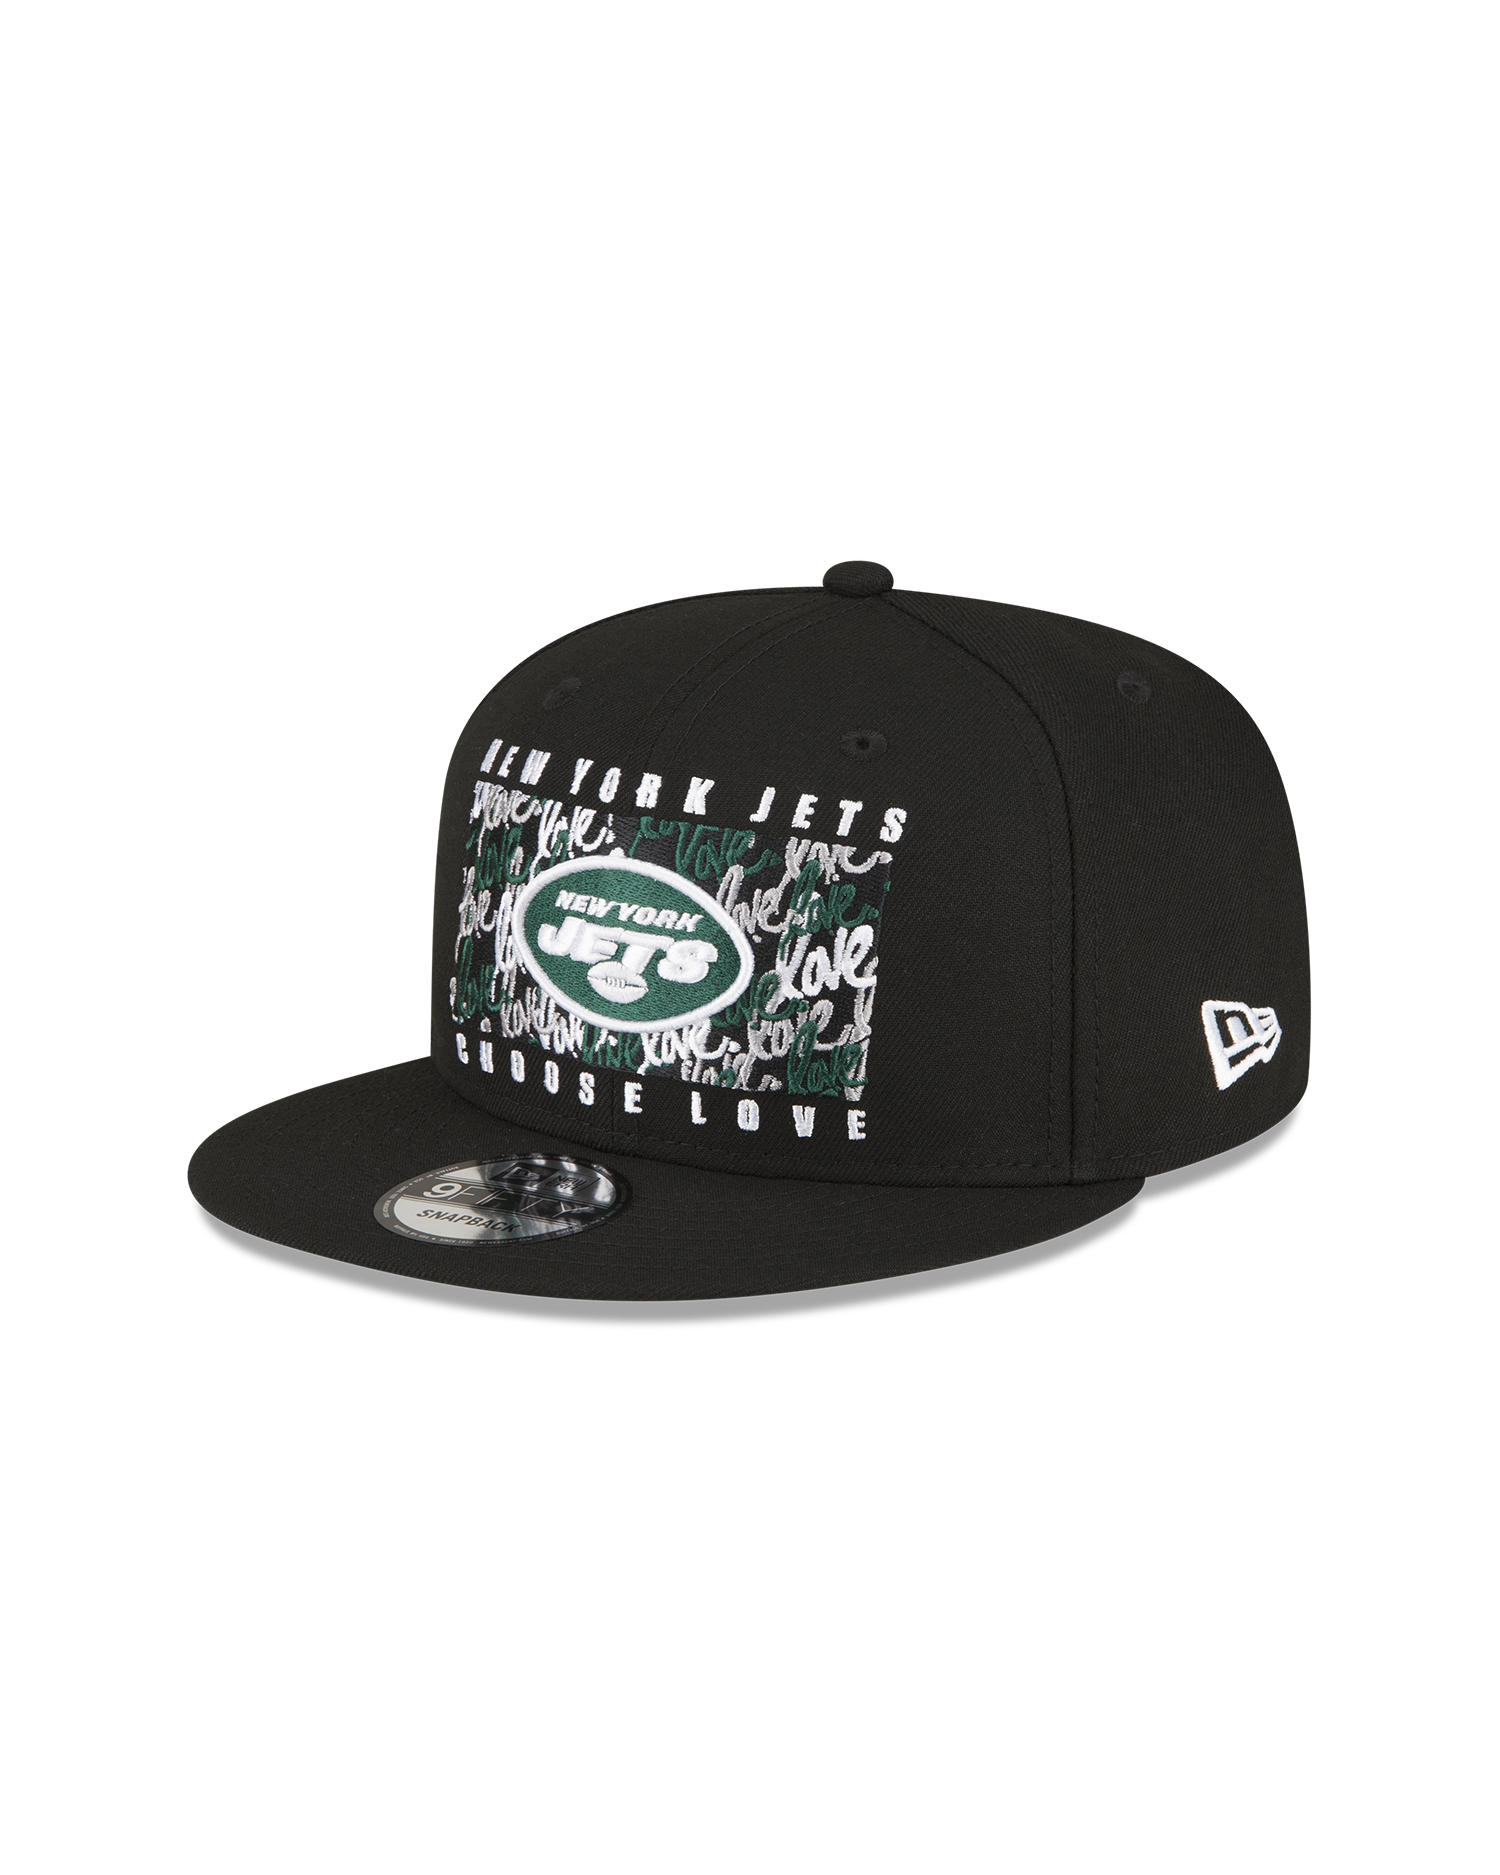 Ruben Rojas x New York Jets Black 9FIFTY Snapbacks